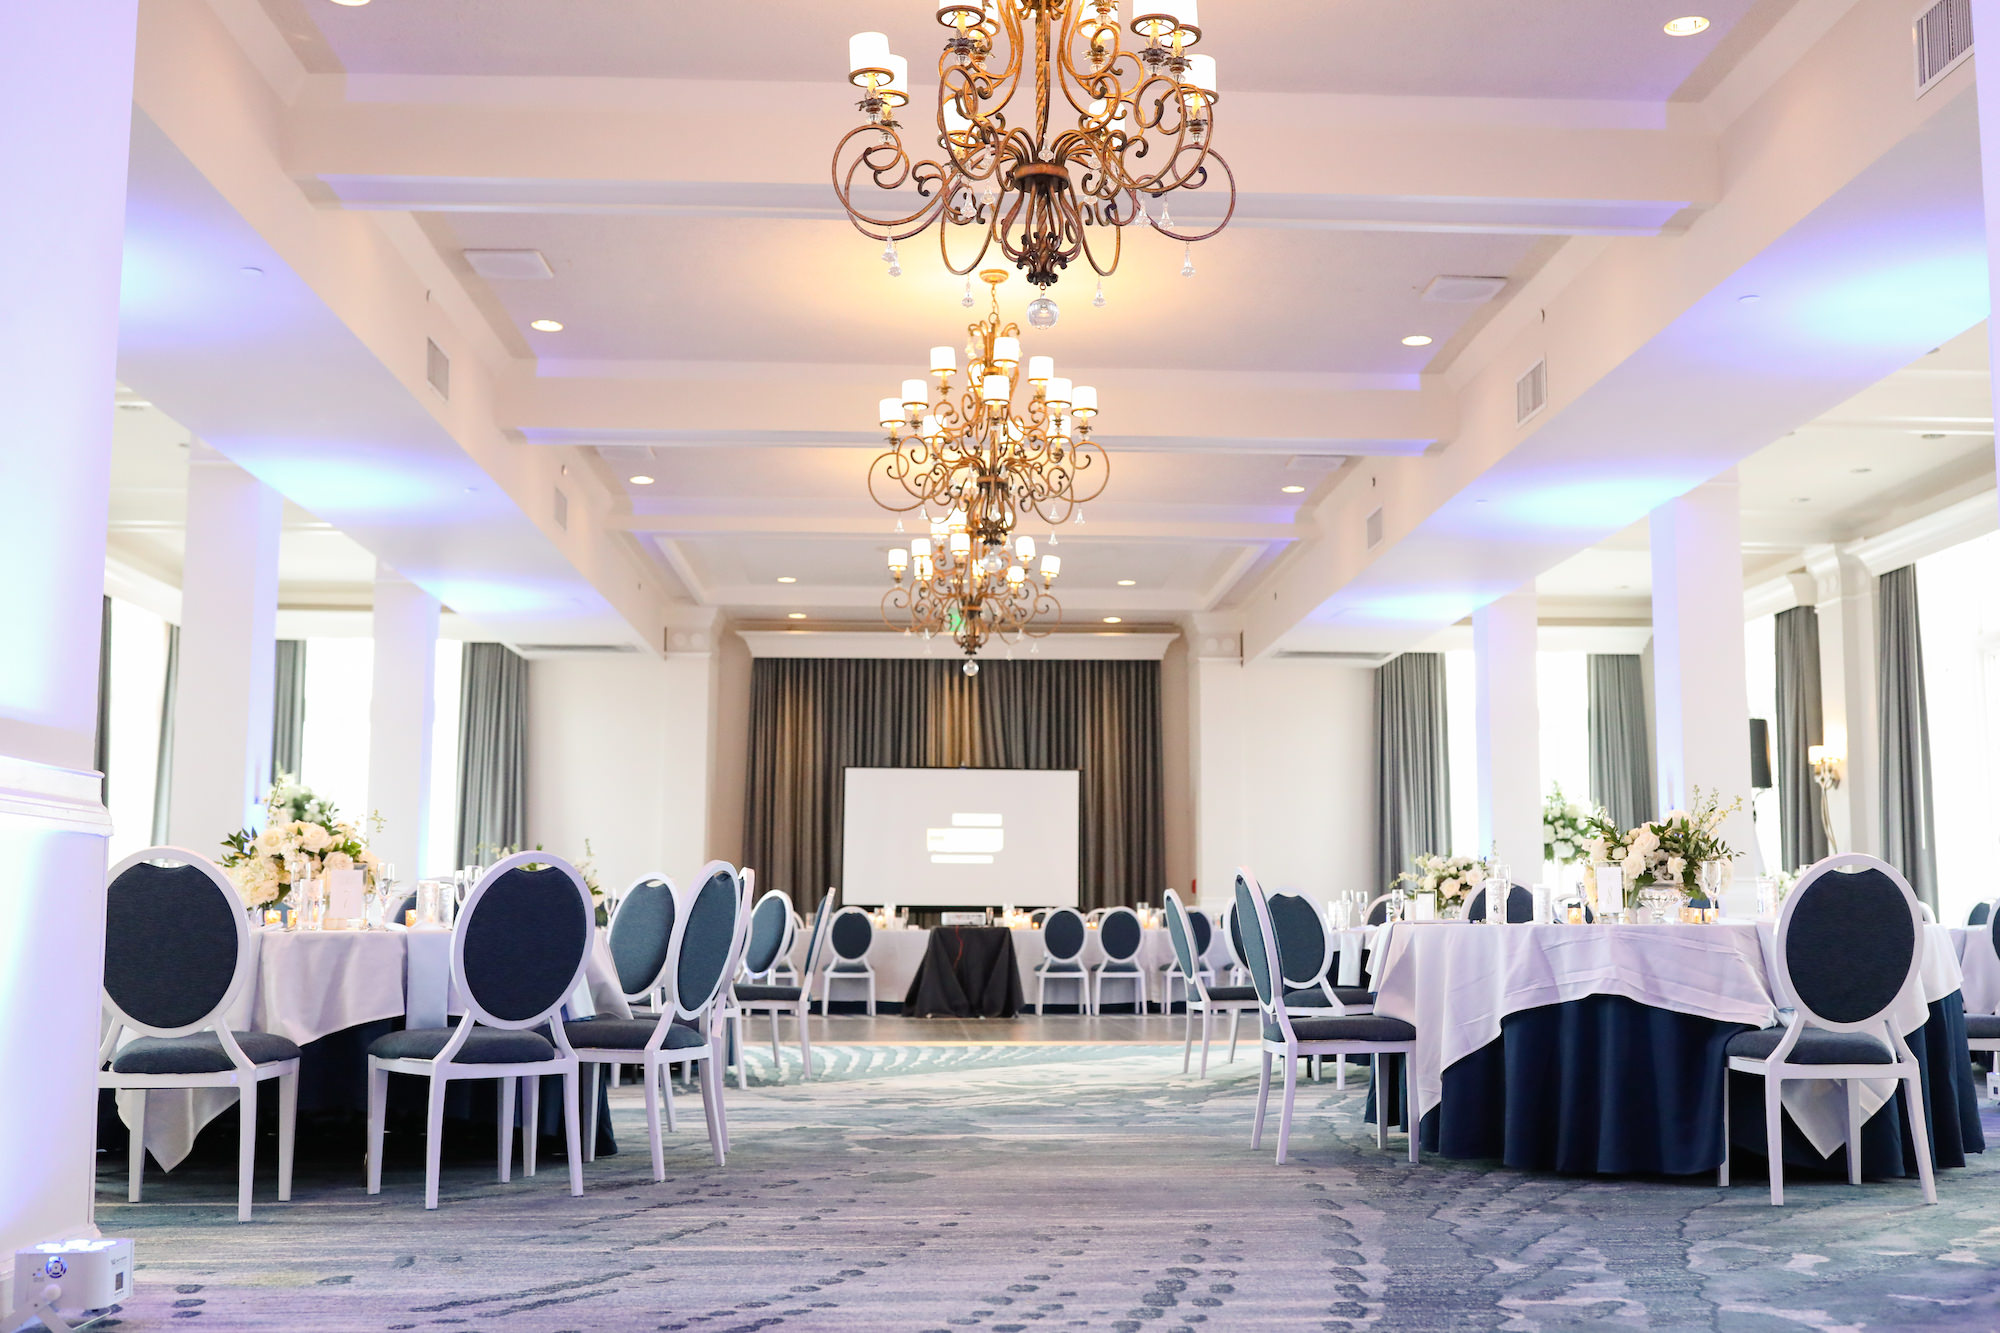 King Charles Ballroom Wedding Reception | St Pete Venue Don CeSar